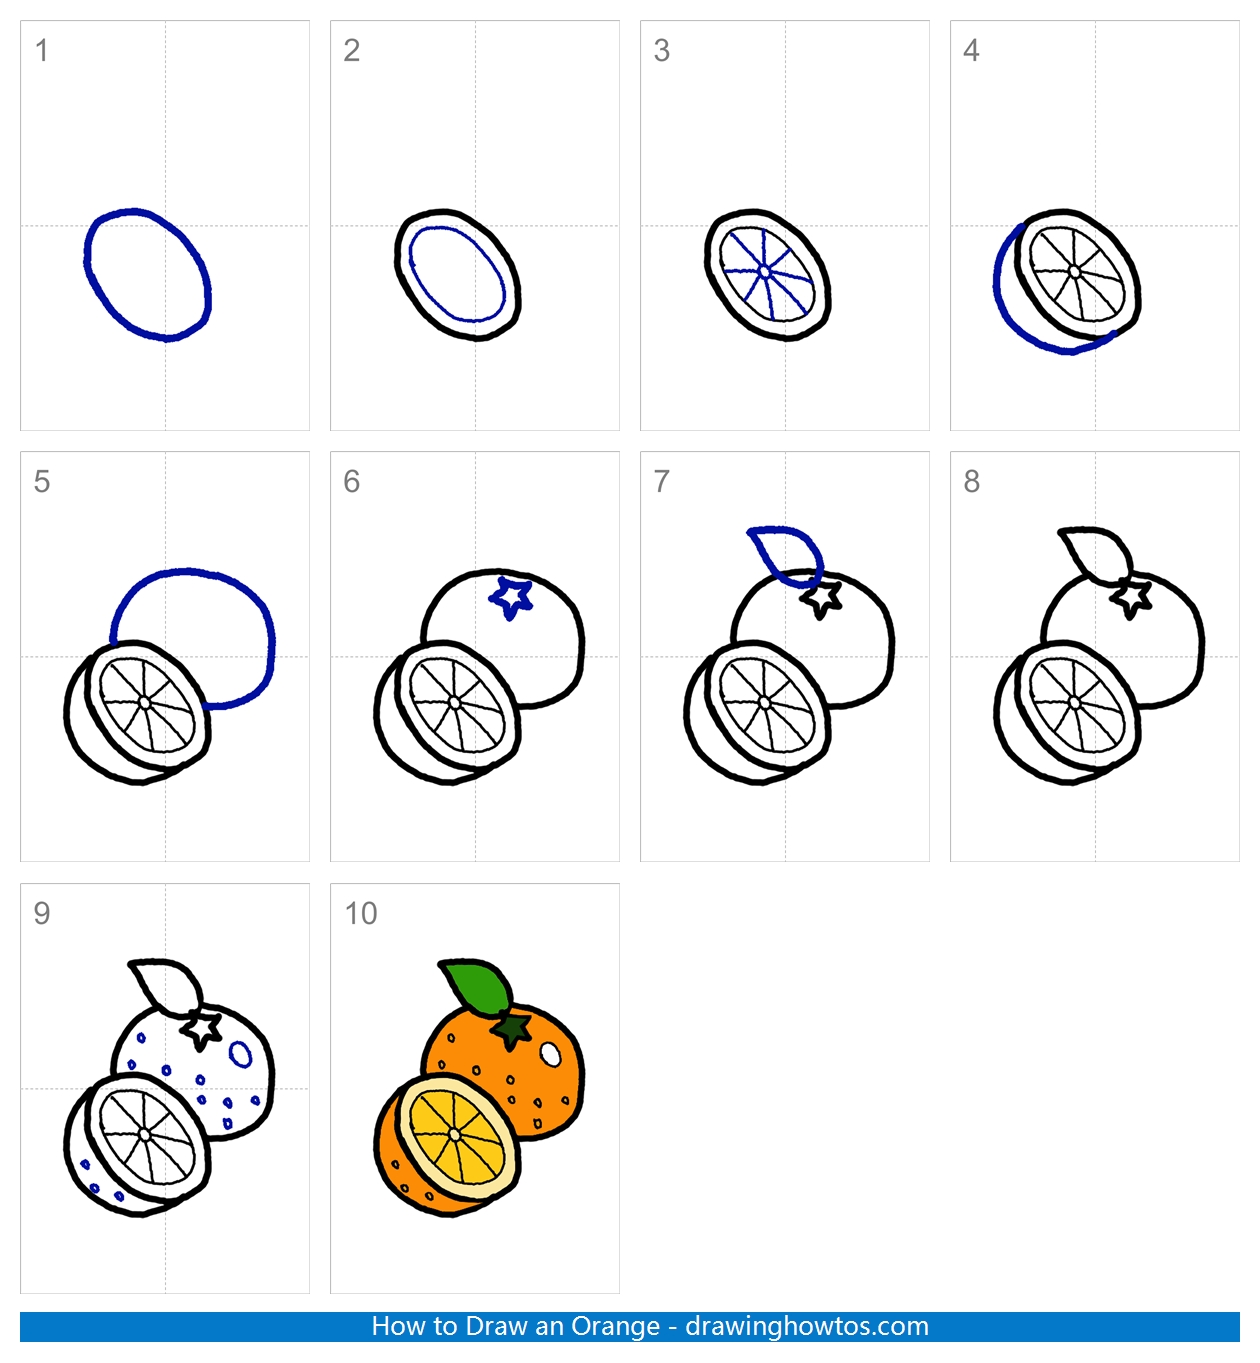 How to Draw an Orange Step by Step